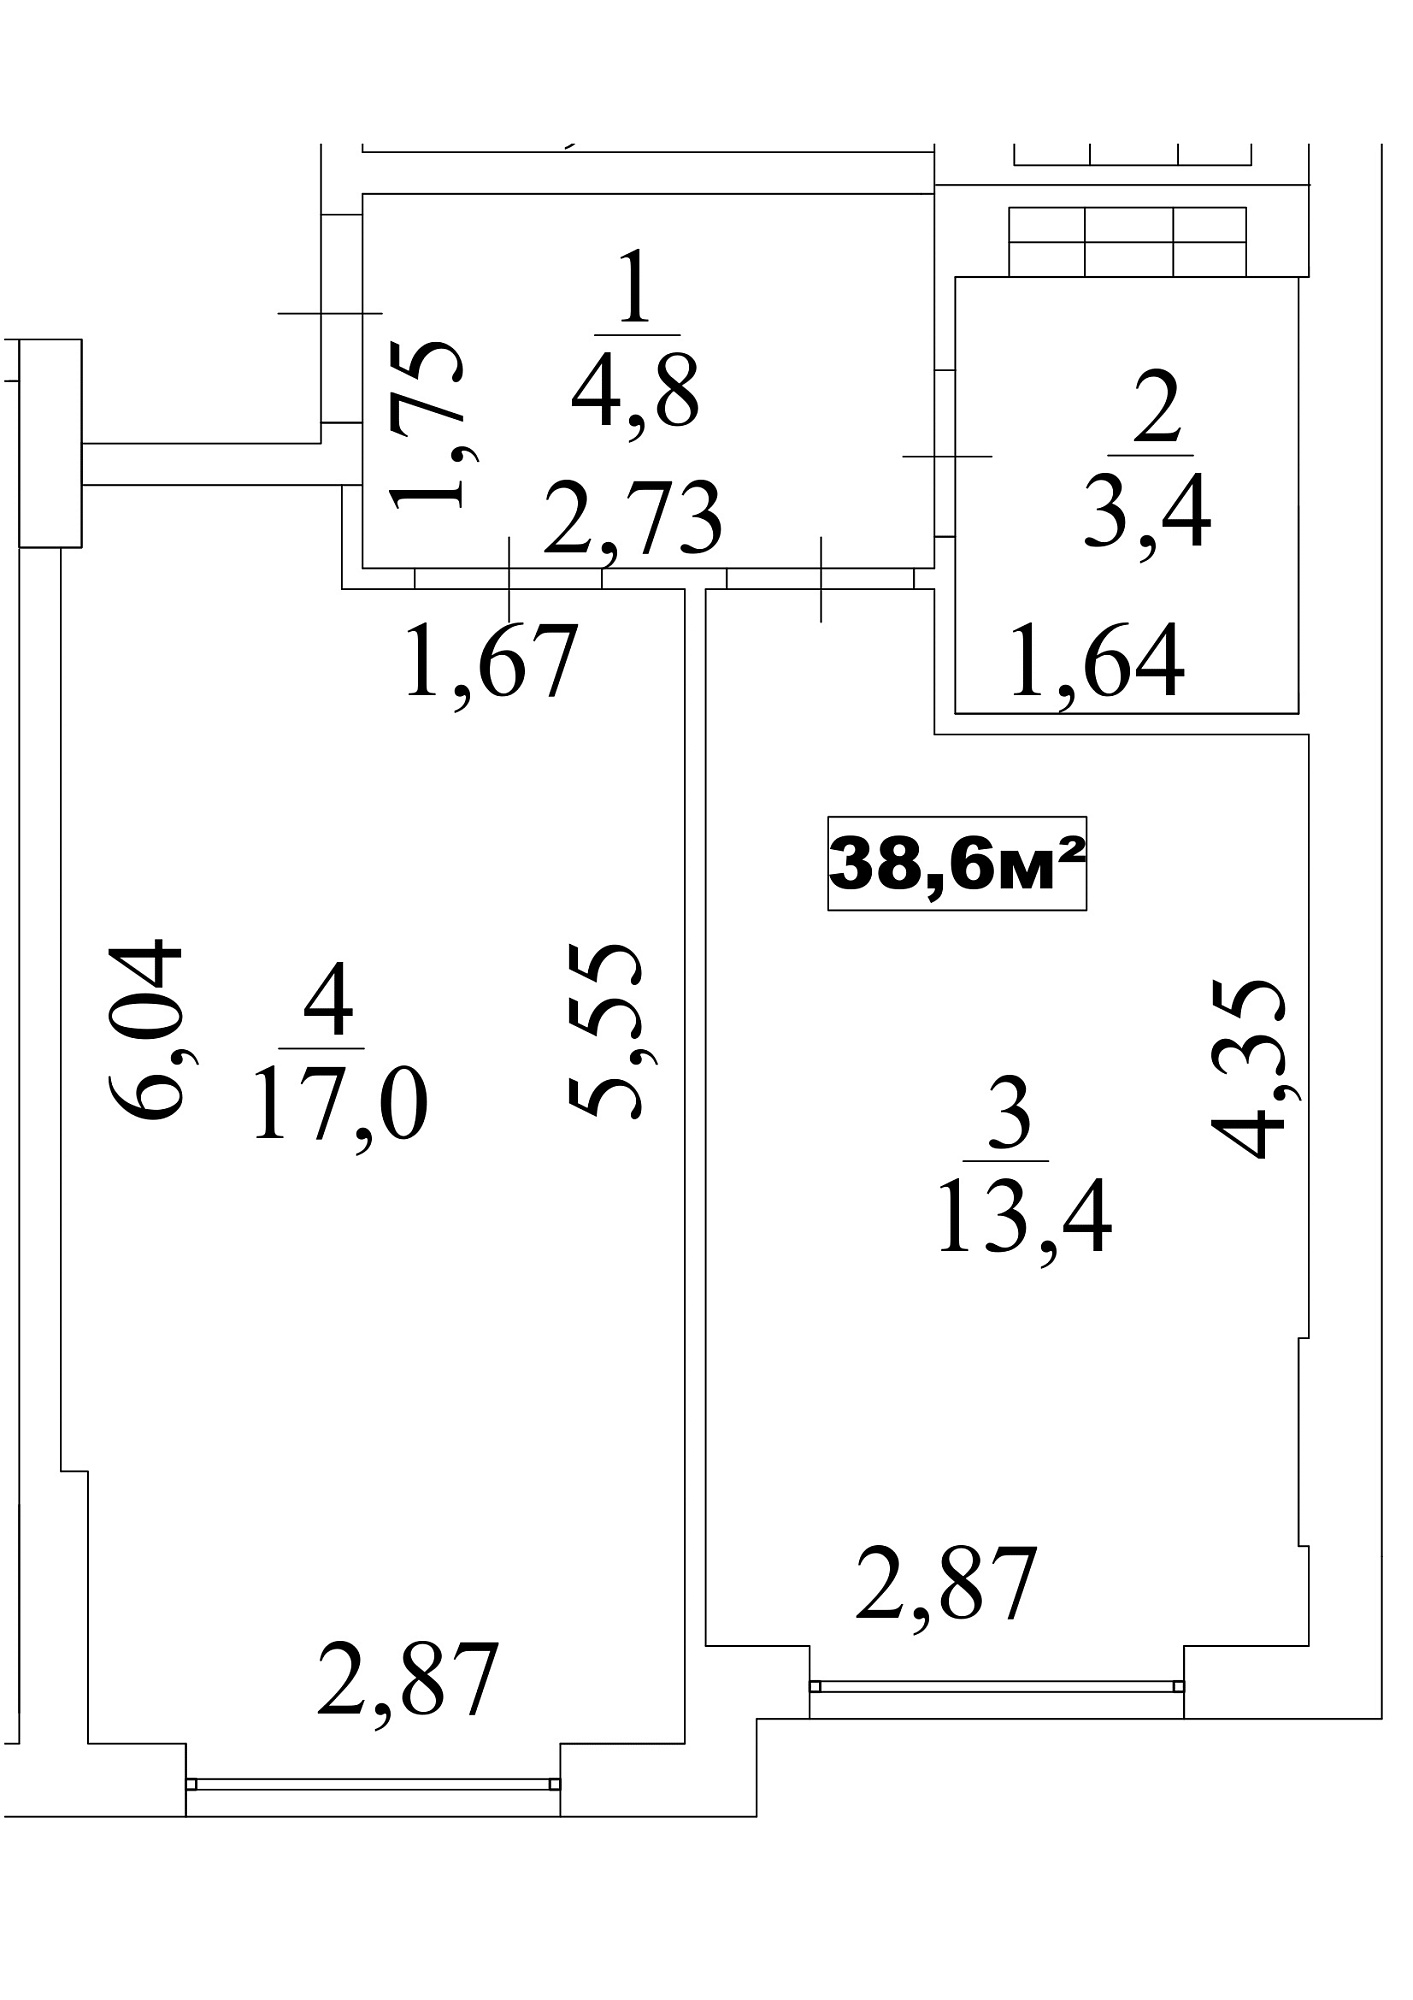 Planning 1-rm flats area 38.6m2, AB-10-03/0025в.